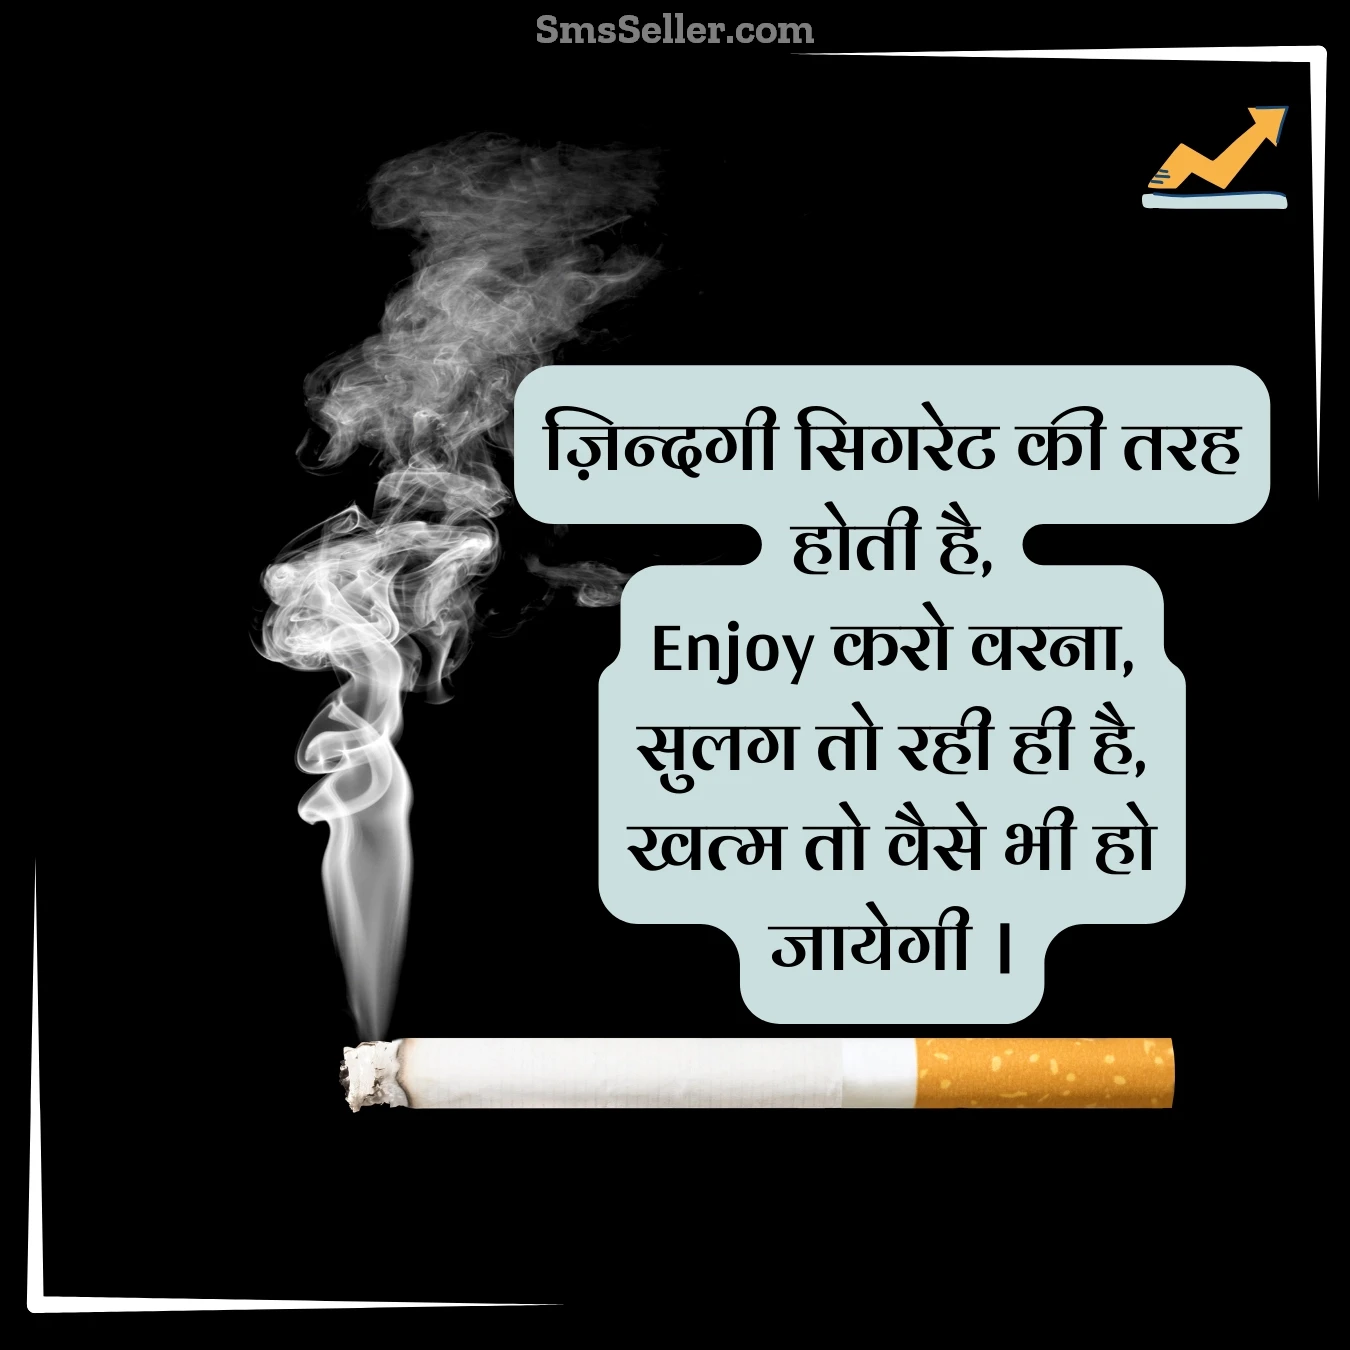 life and smoking in hindi zindagee sigaret ki tarha hotee